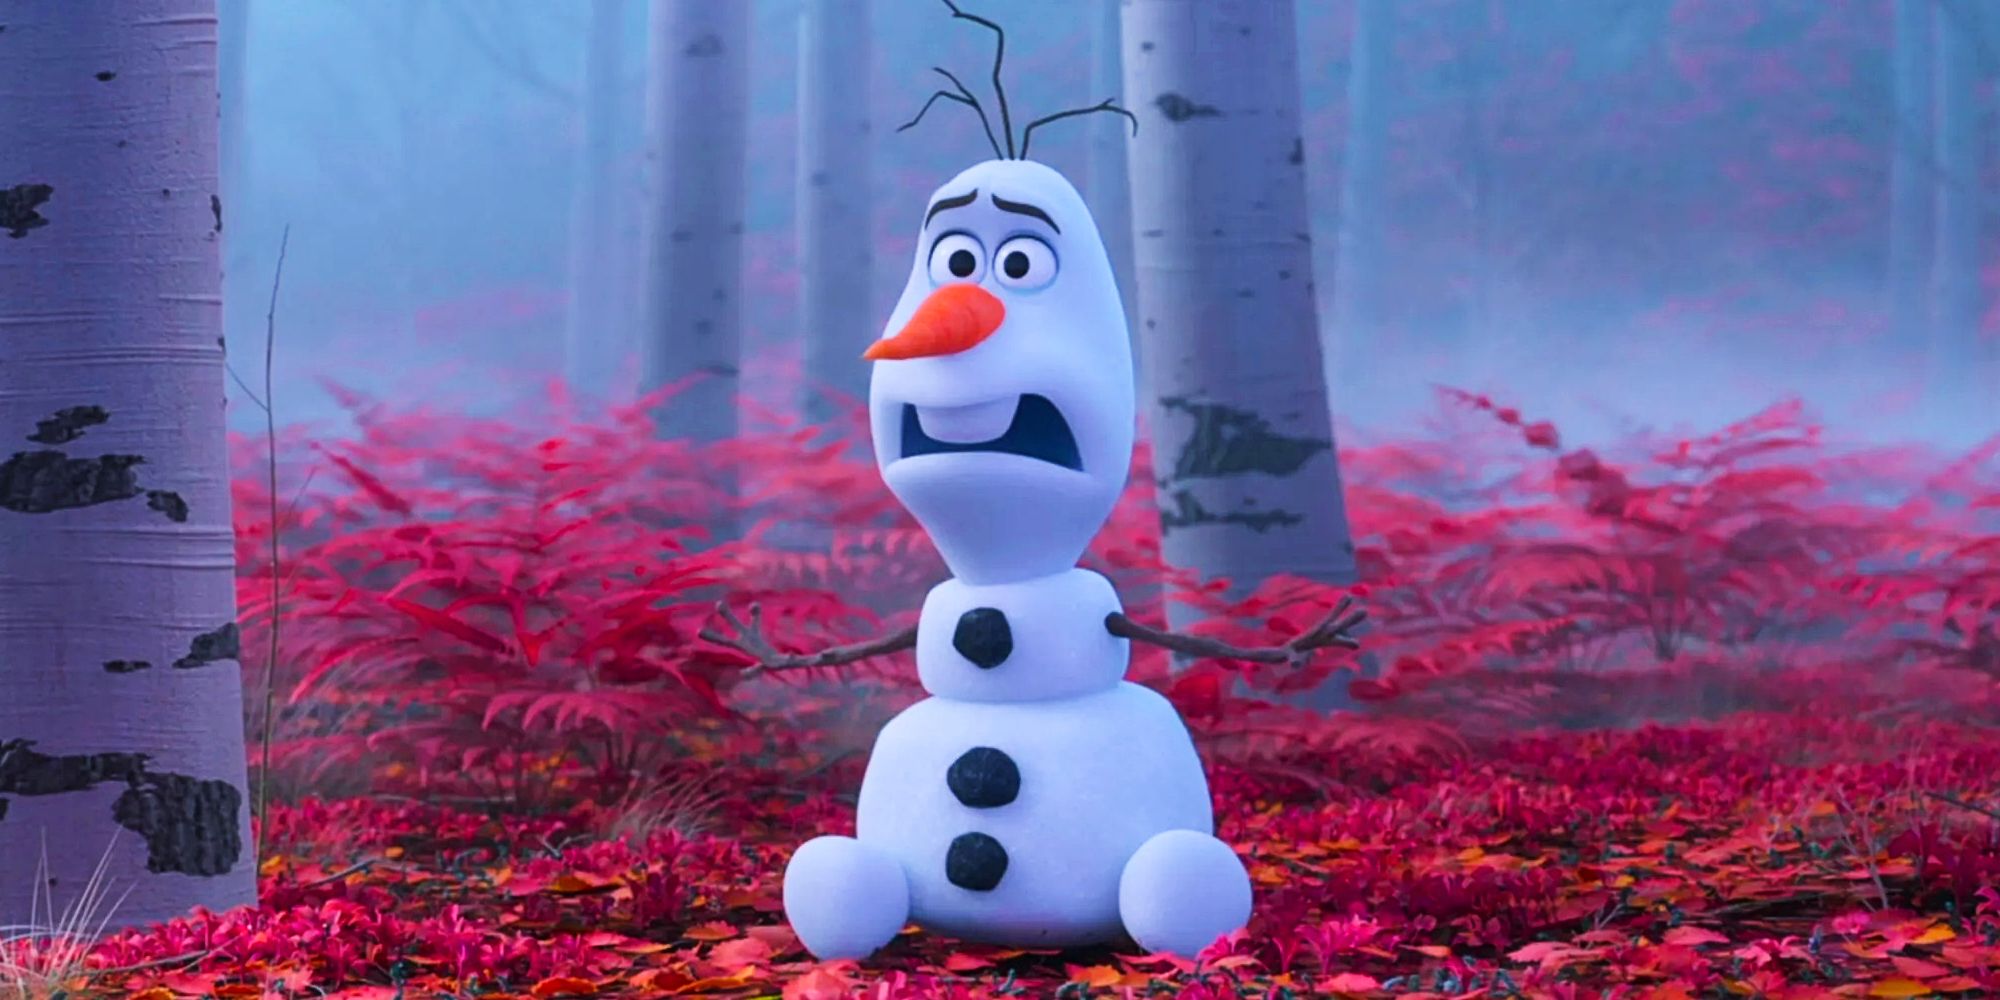 The Horror Of Olaf's Biology Imagined In Terrifying Disney Art